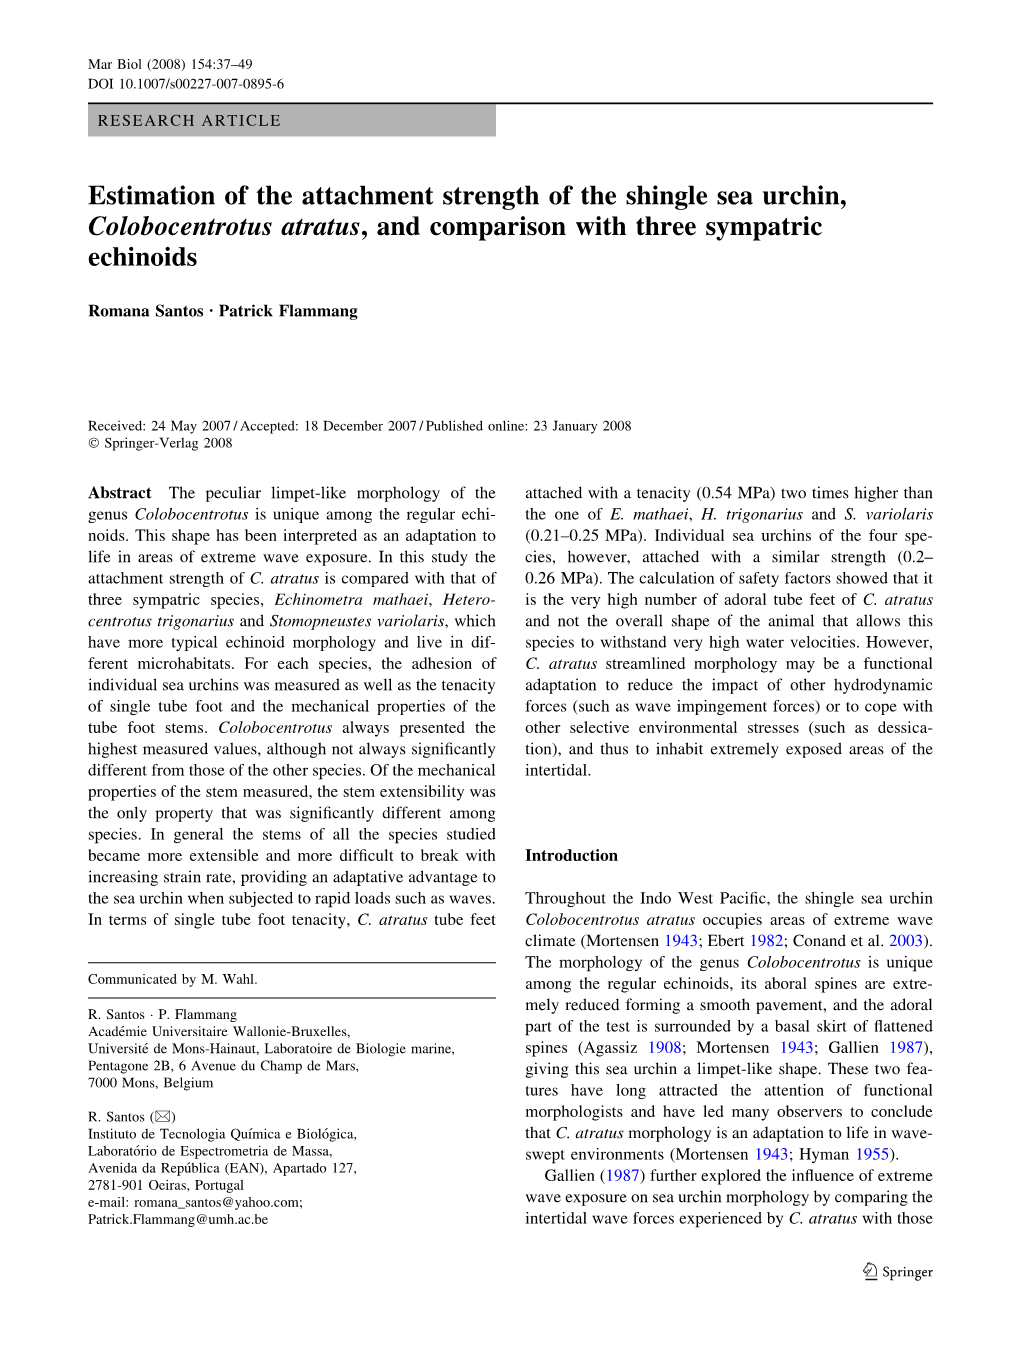 Estimation of the Attachment Strength of the Shingle Sea Urchin, Colobocentrotus Atratus, and Comparison with Three Sympatric Echinoids